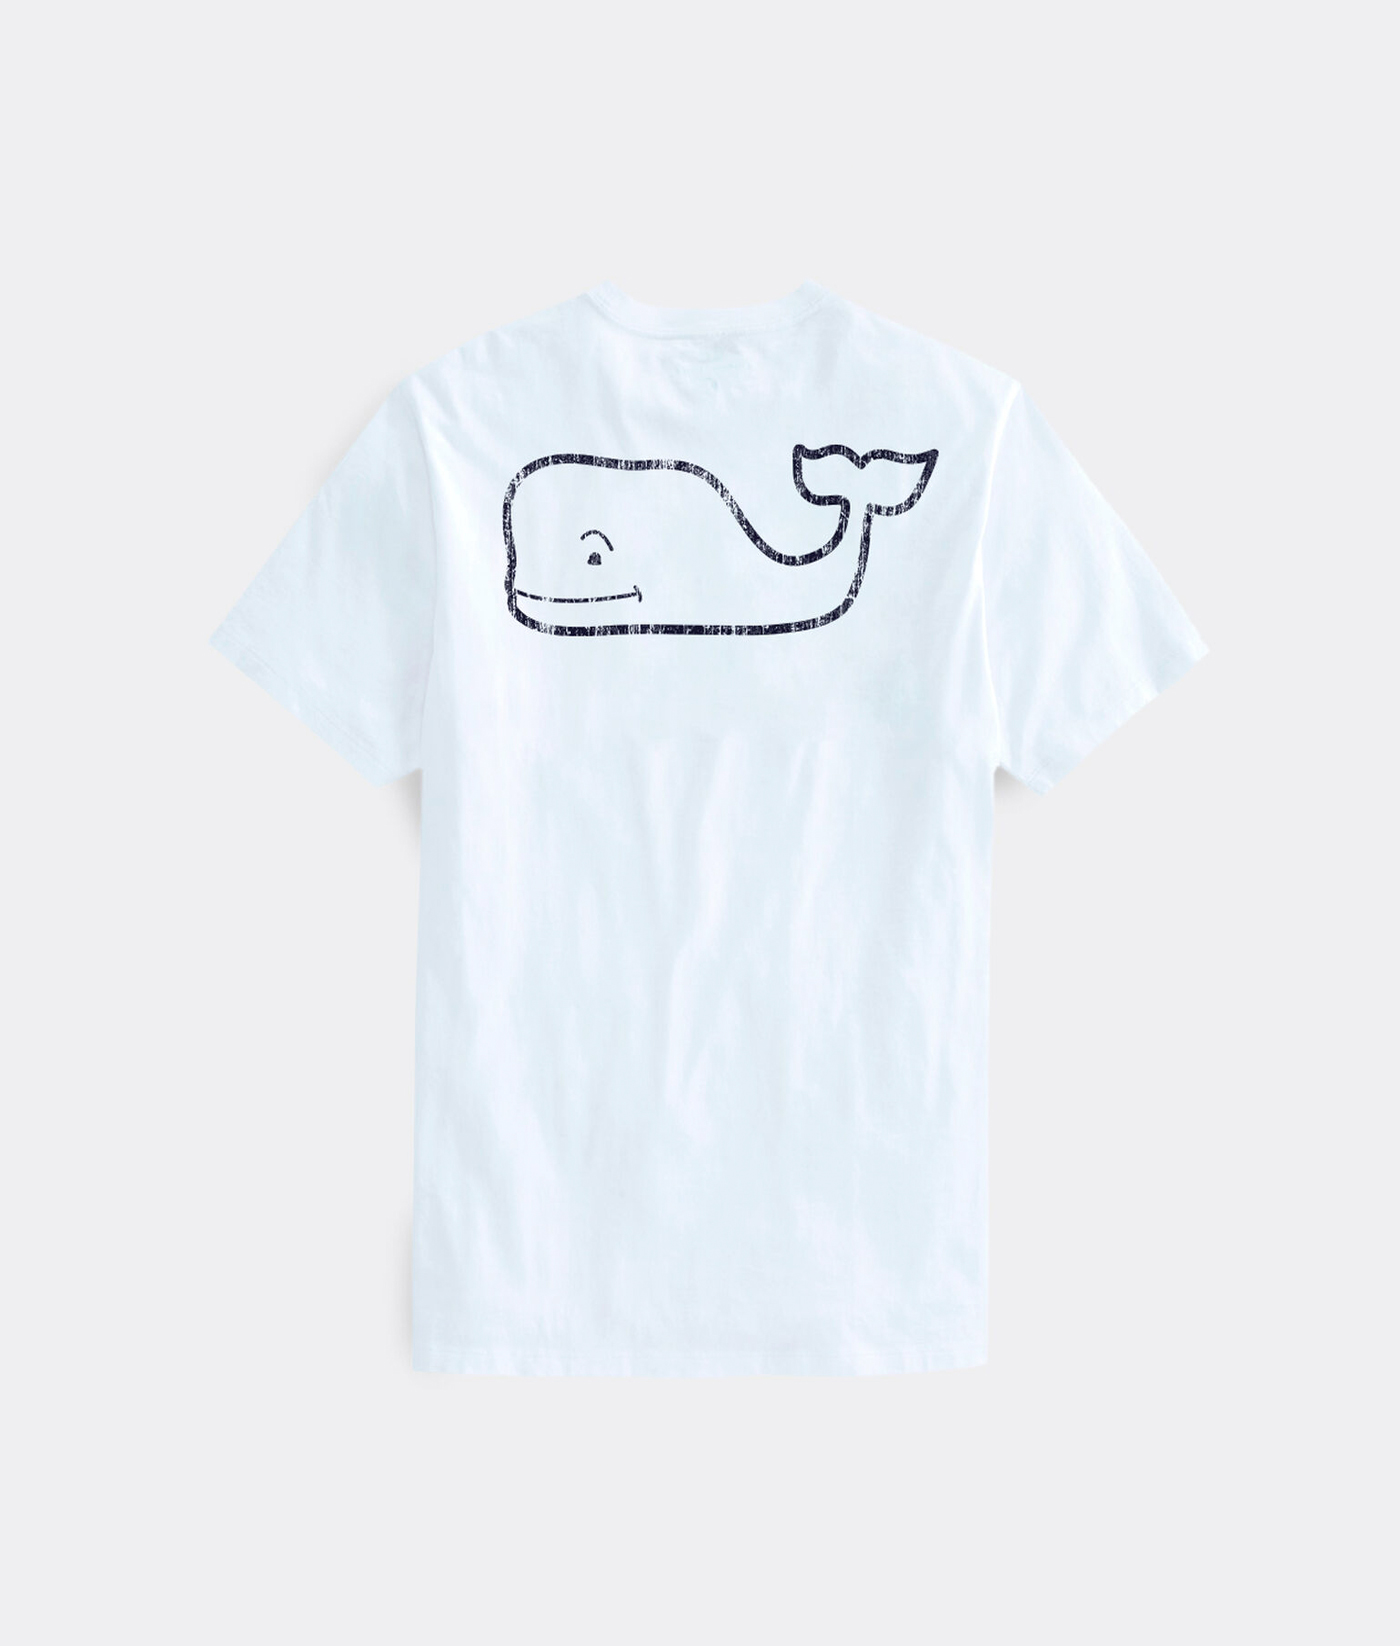 vineyard vines Men's Short Sleeve Americana Whale Pocket T-Shirt, White  Cap, X-Small